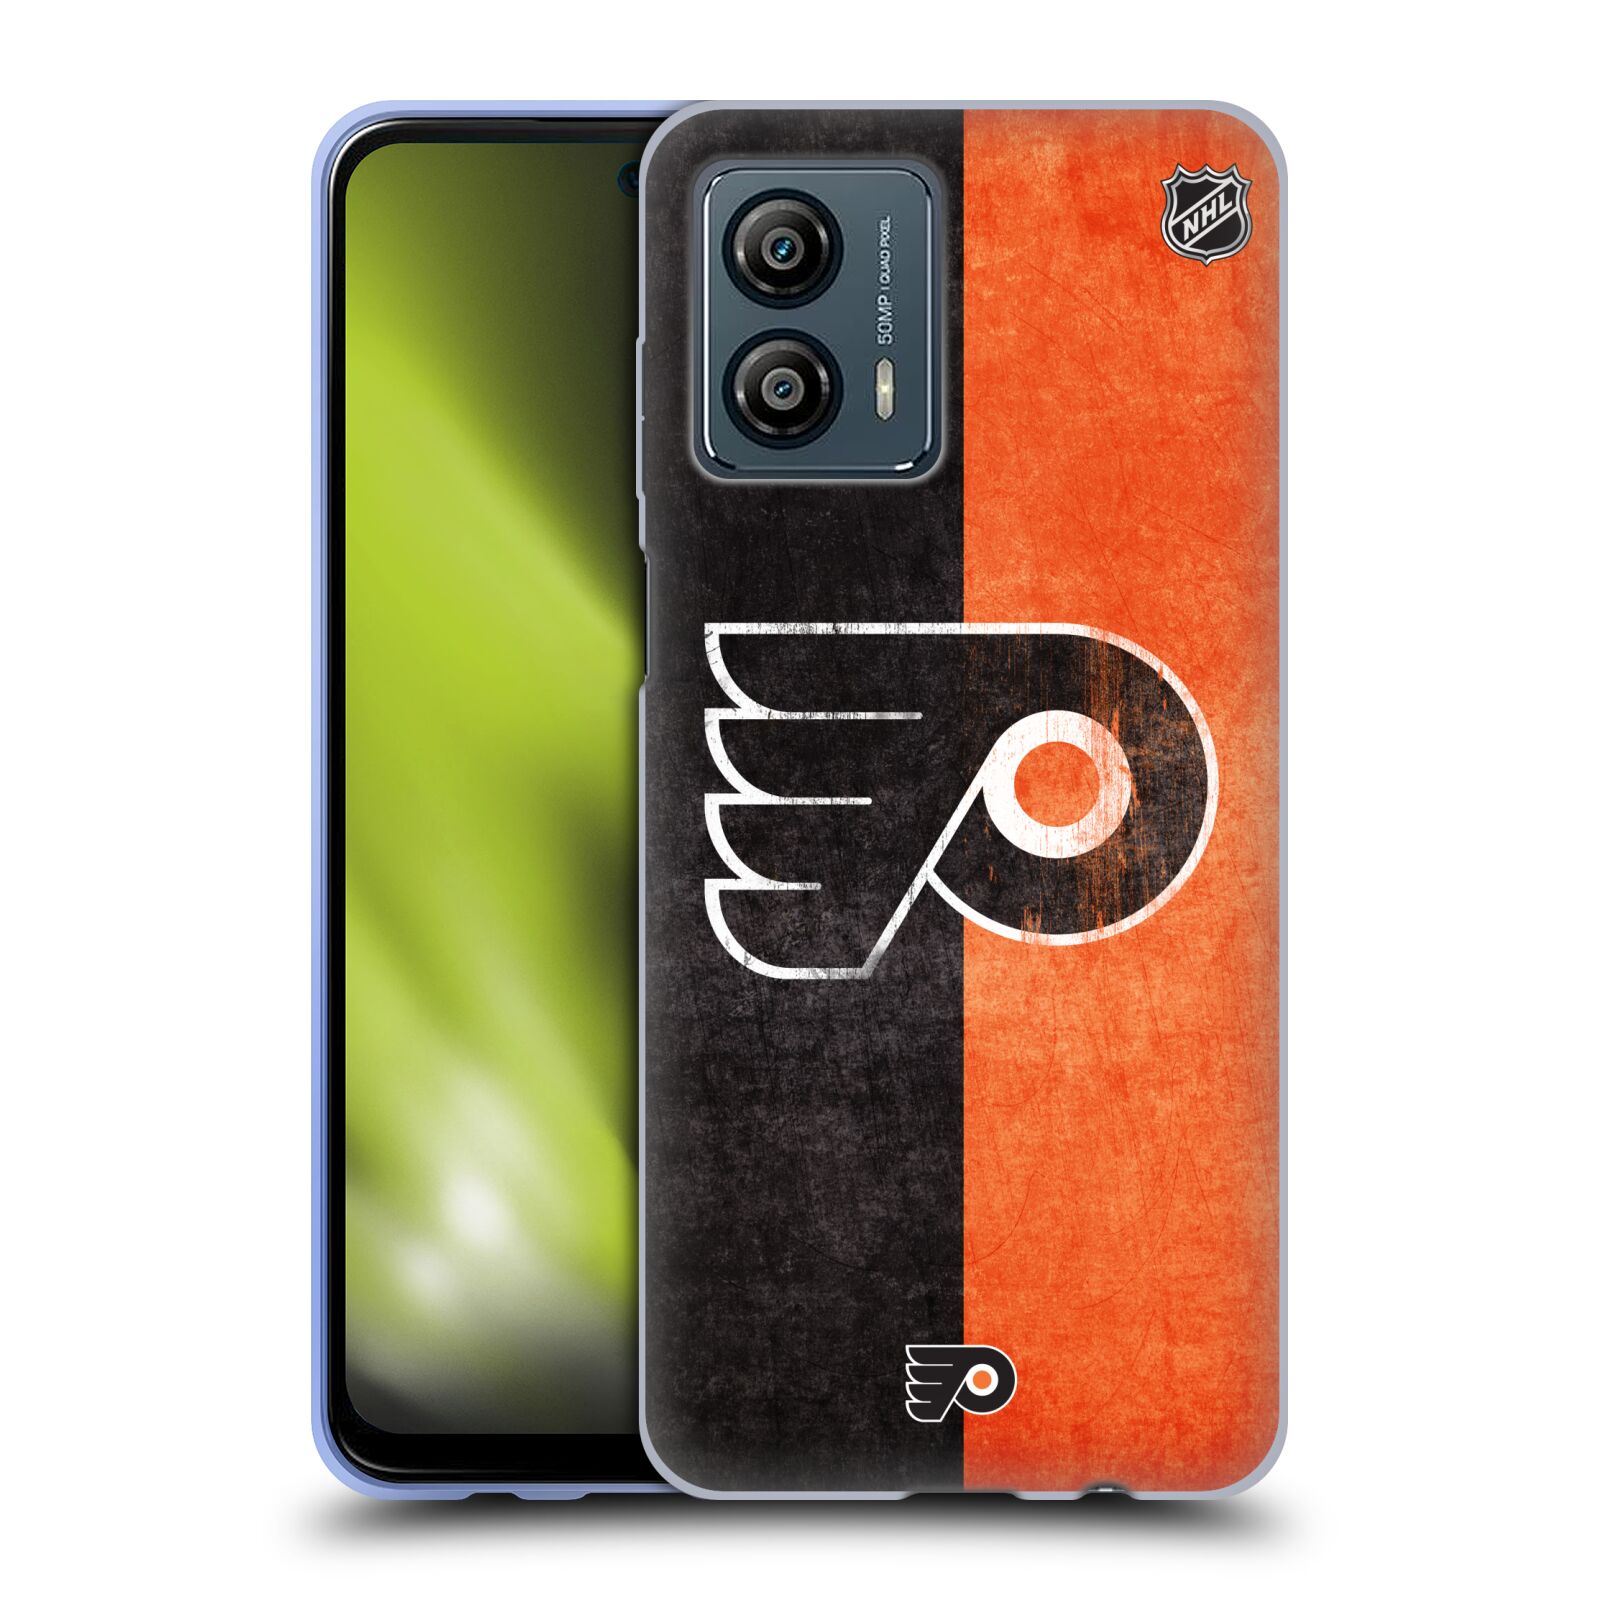 Silikonové pouzdro na mobil Motorola Moto G53 5G - NHL - Půlené logo Philadelphia Flyers (Silikonový kryt, obal, pouzdro na mobilní telefon Motorola Moto G53 5G s licencovaným motivem NHL - Půlené logo Philadelphia Flyers)